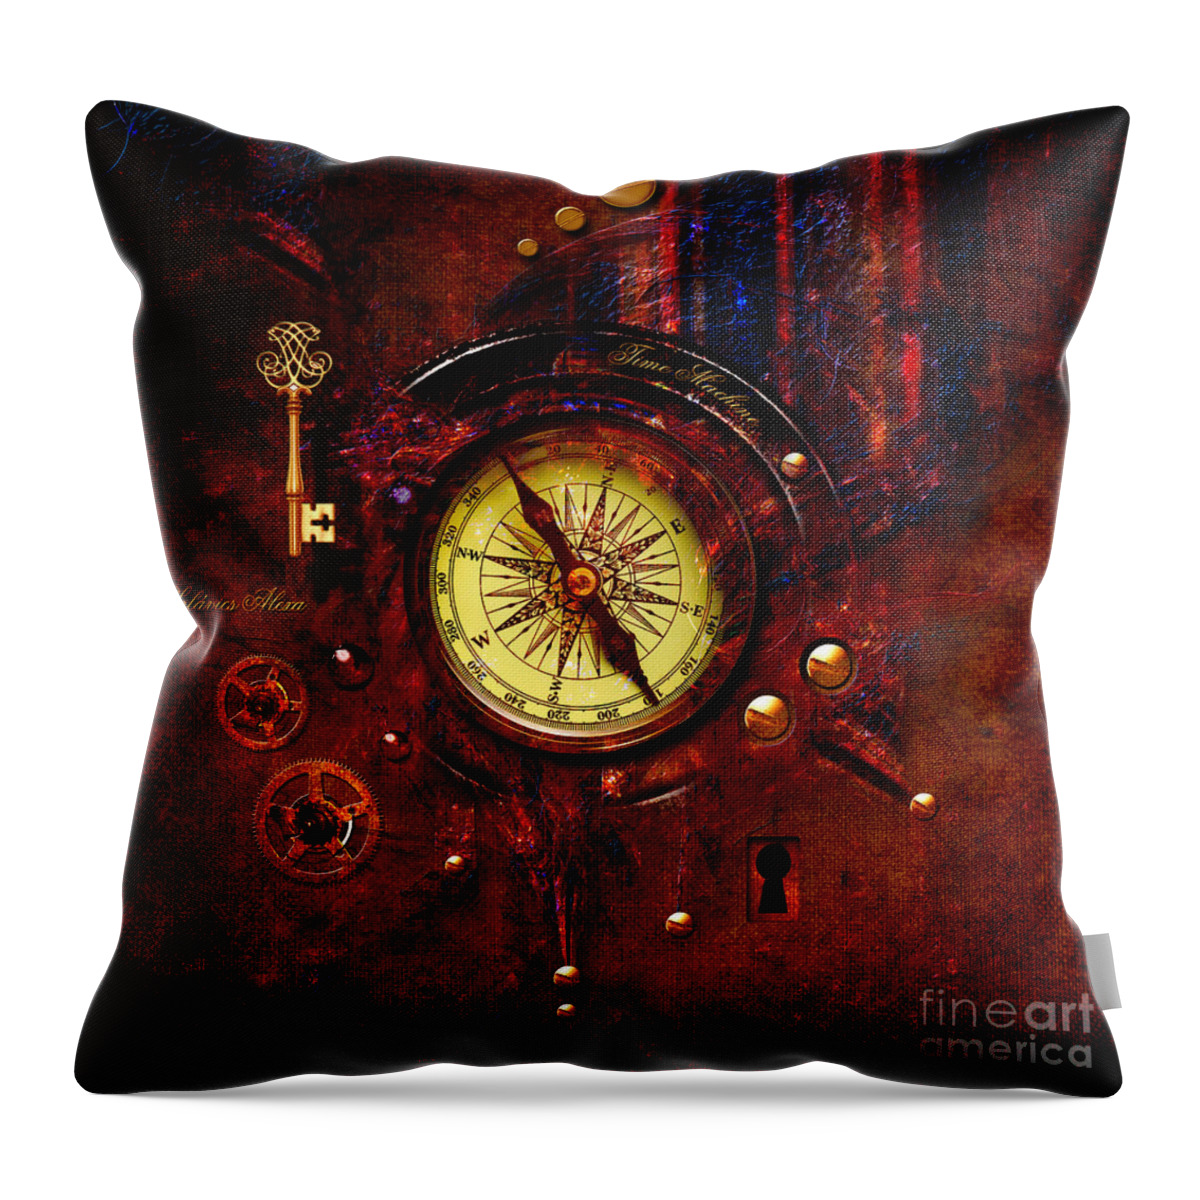 Digital Art Throw Pillow featuring the digital art Rusty Time Machine by Alexa Szlavics